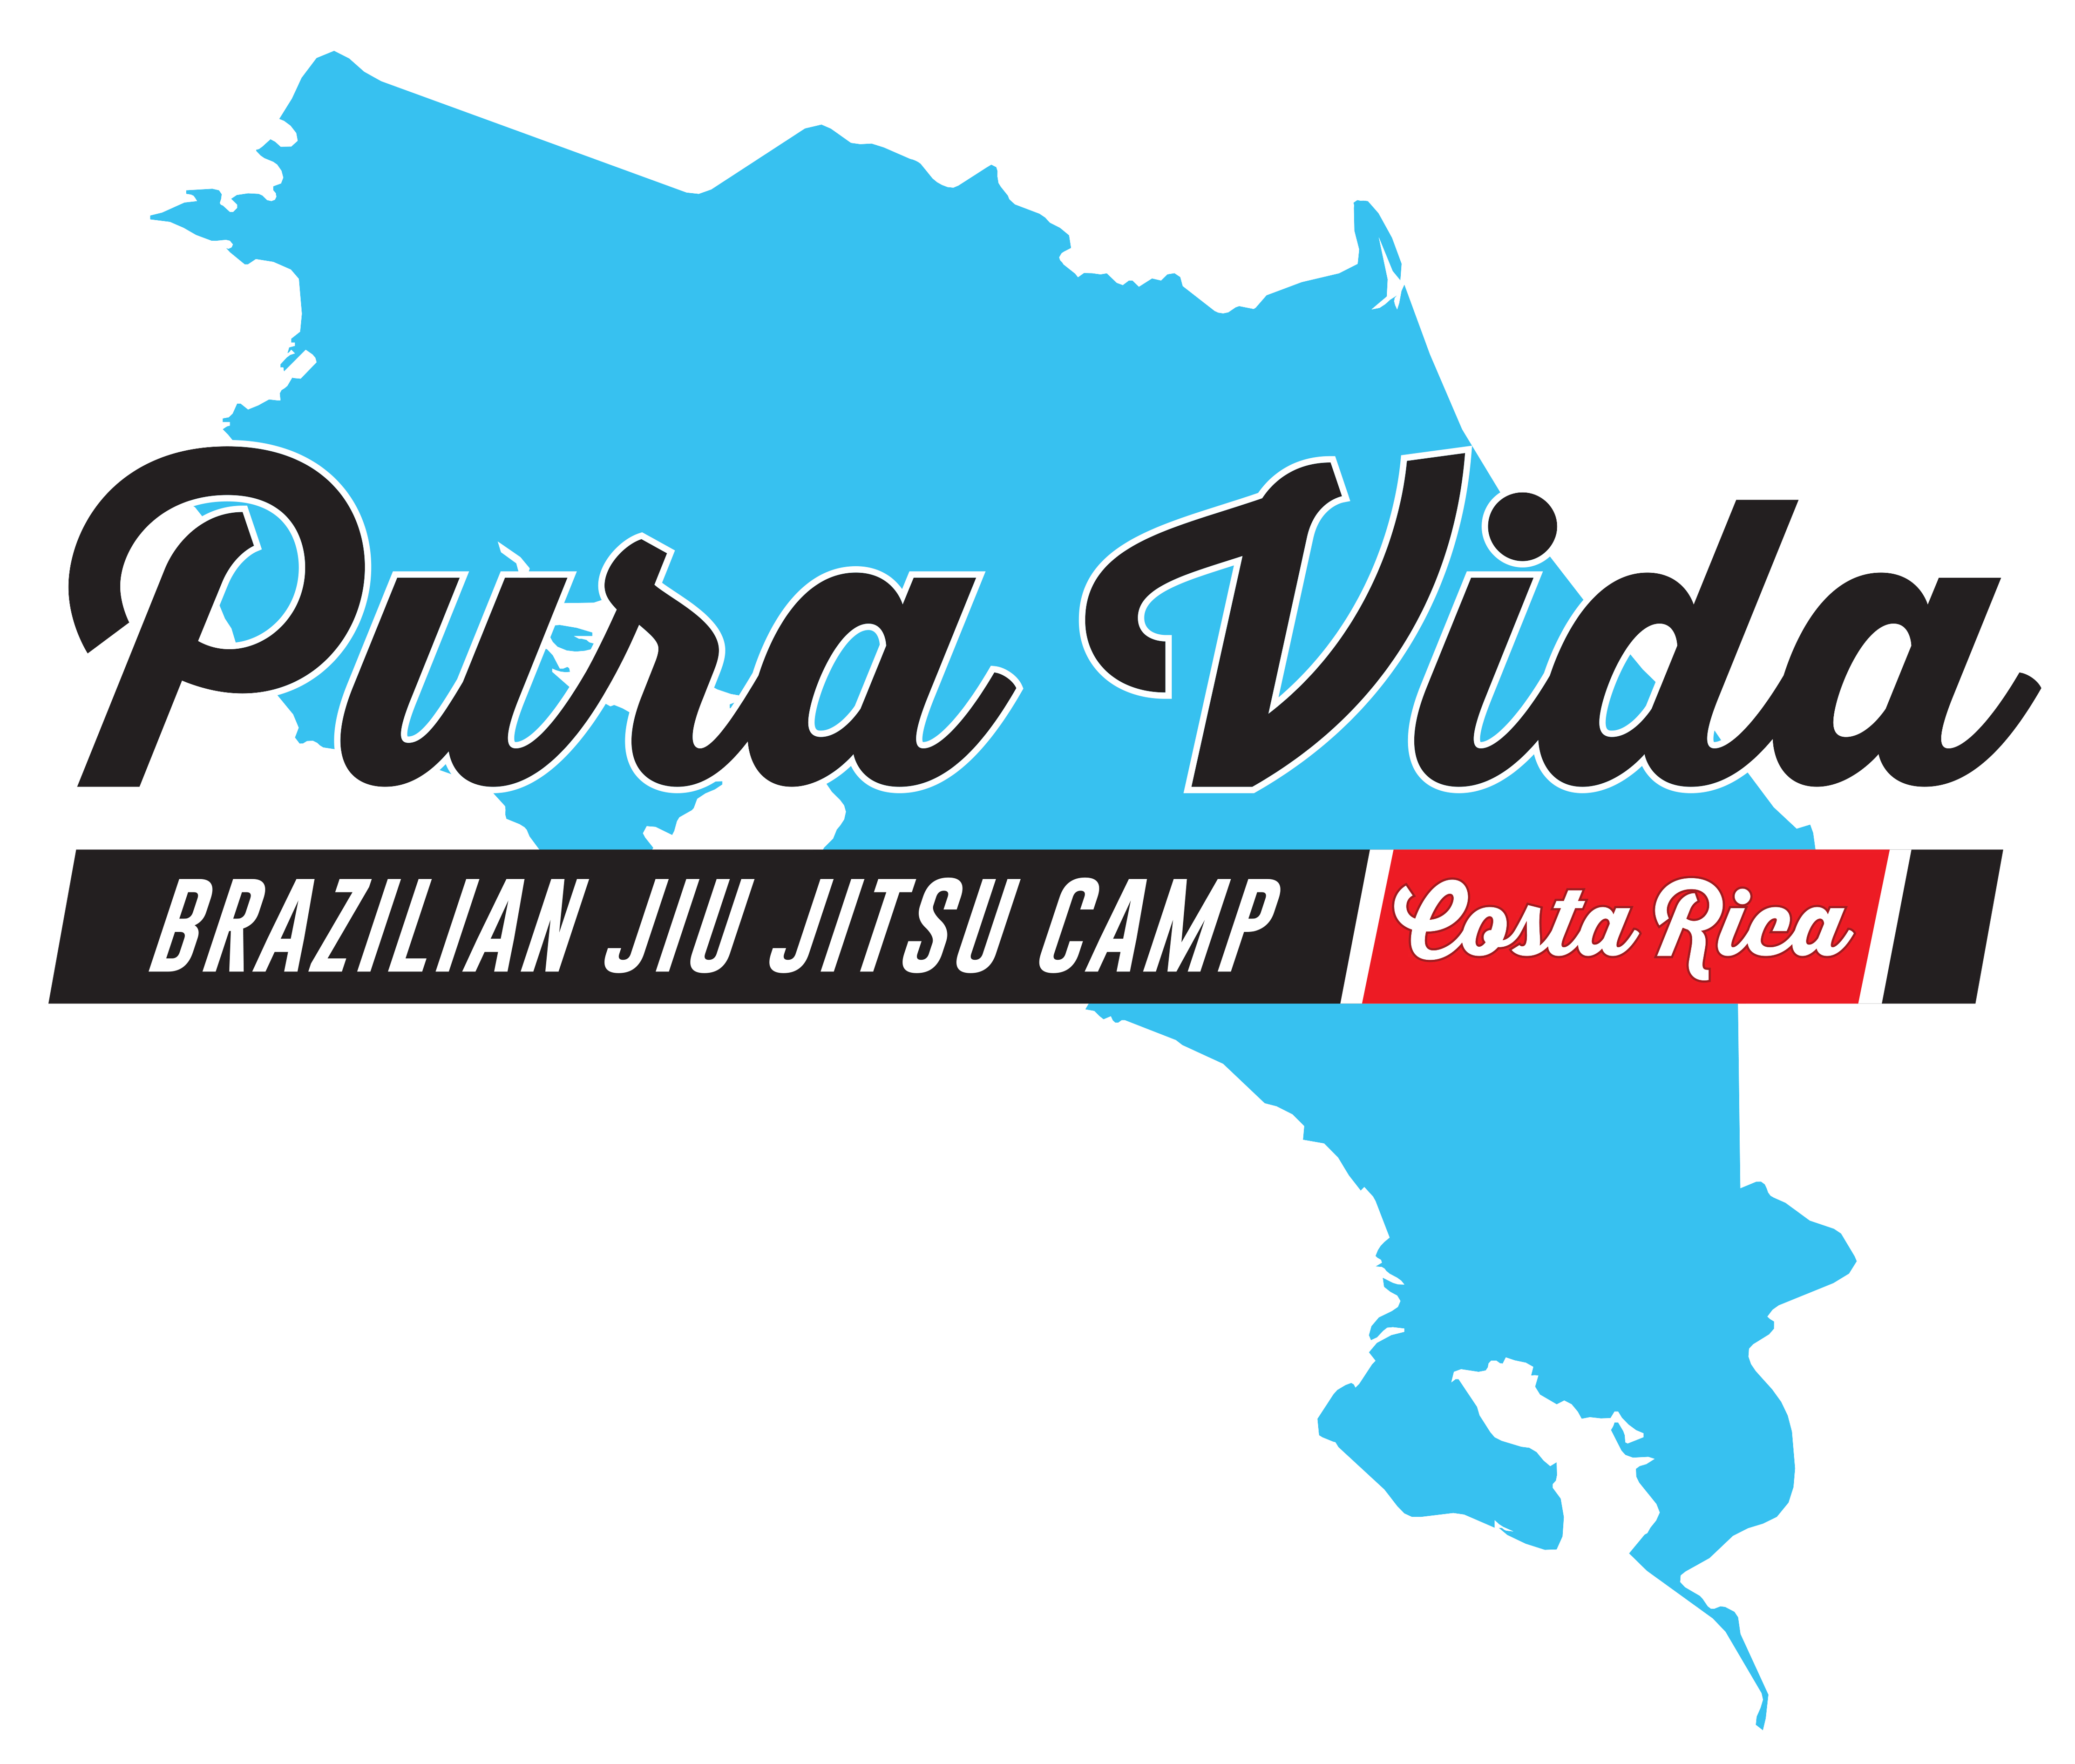 Pura Vida Jiu Jitsu Camp – Costa Rica- Jan 14-19th, 2017